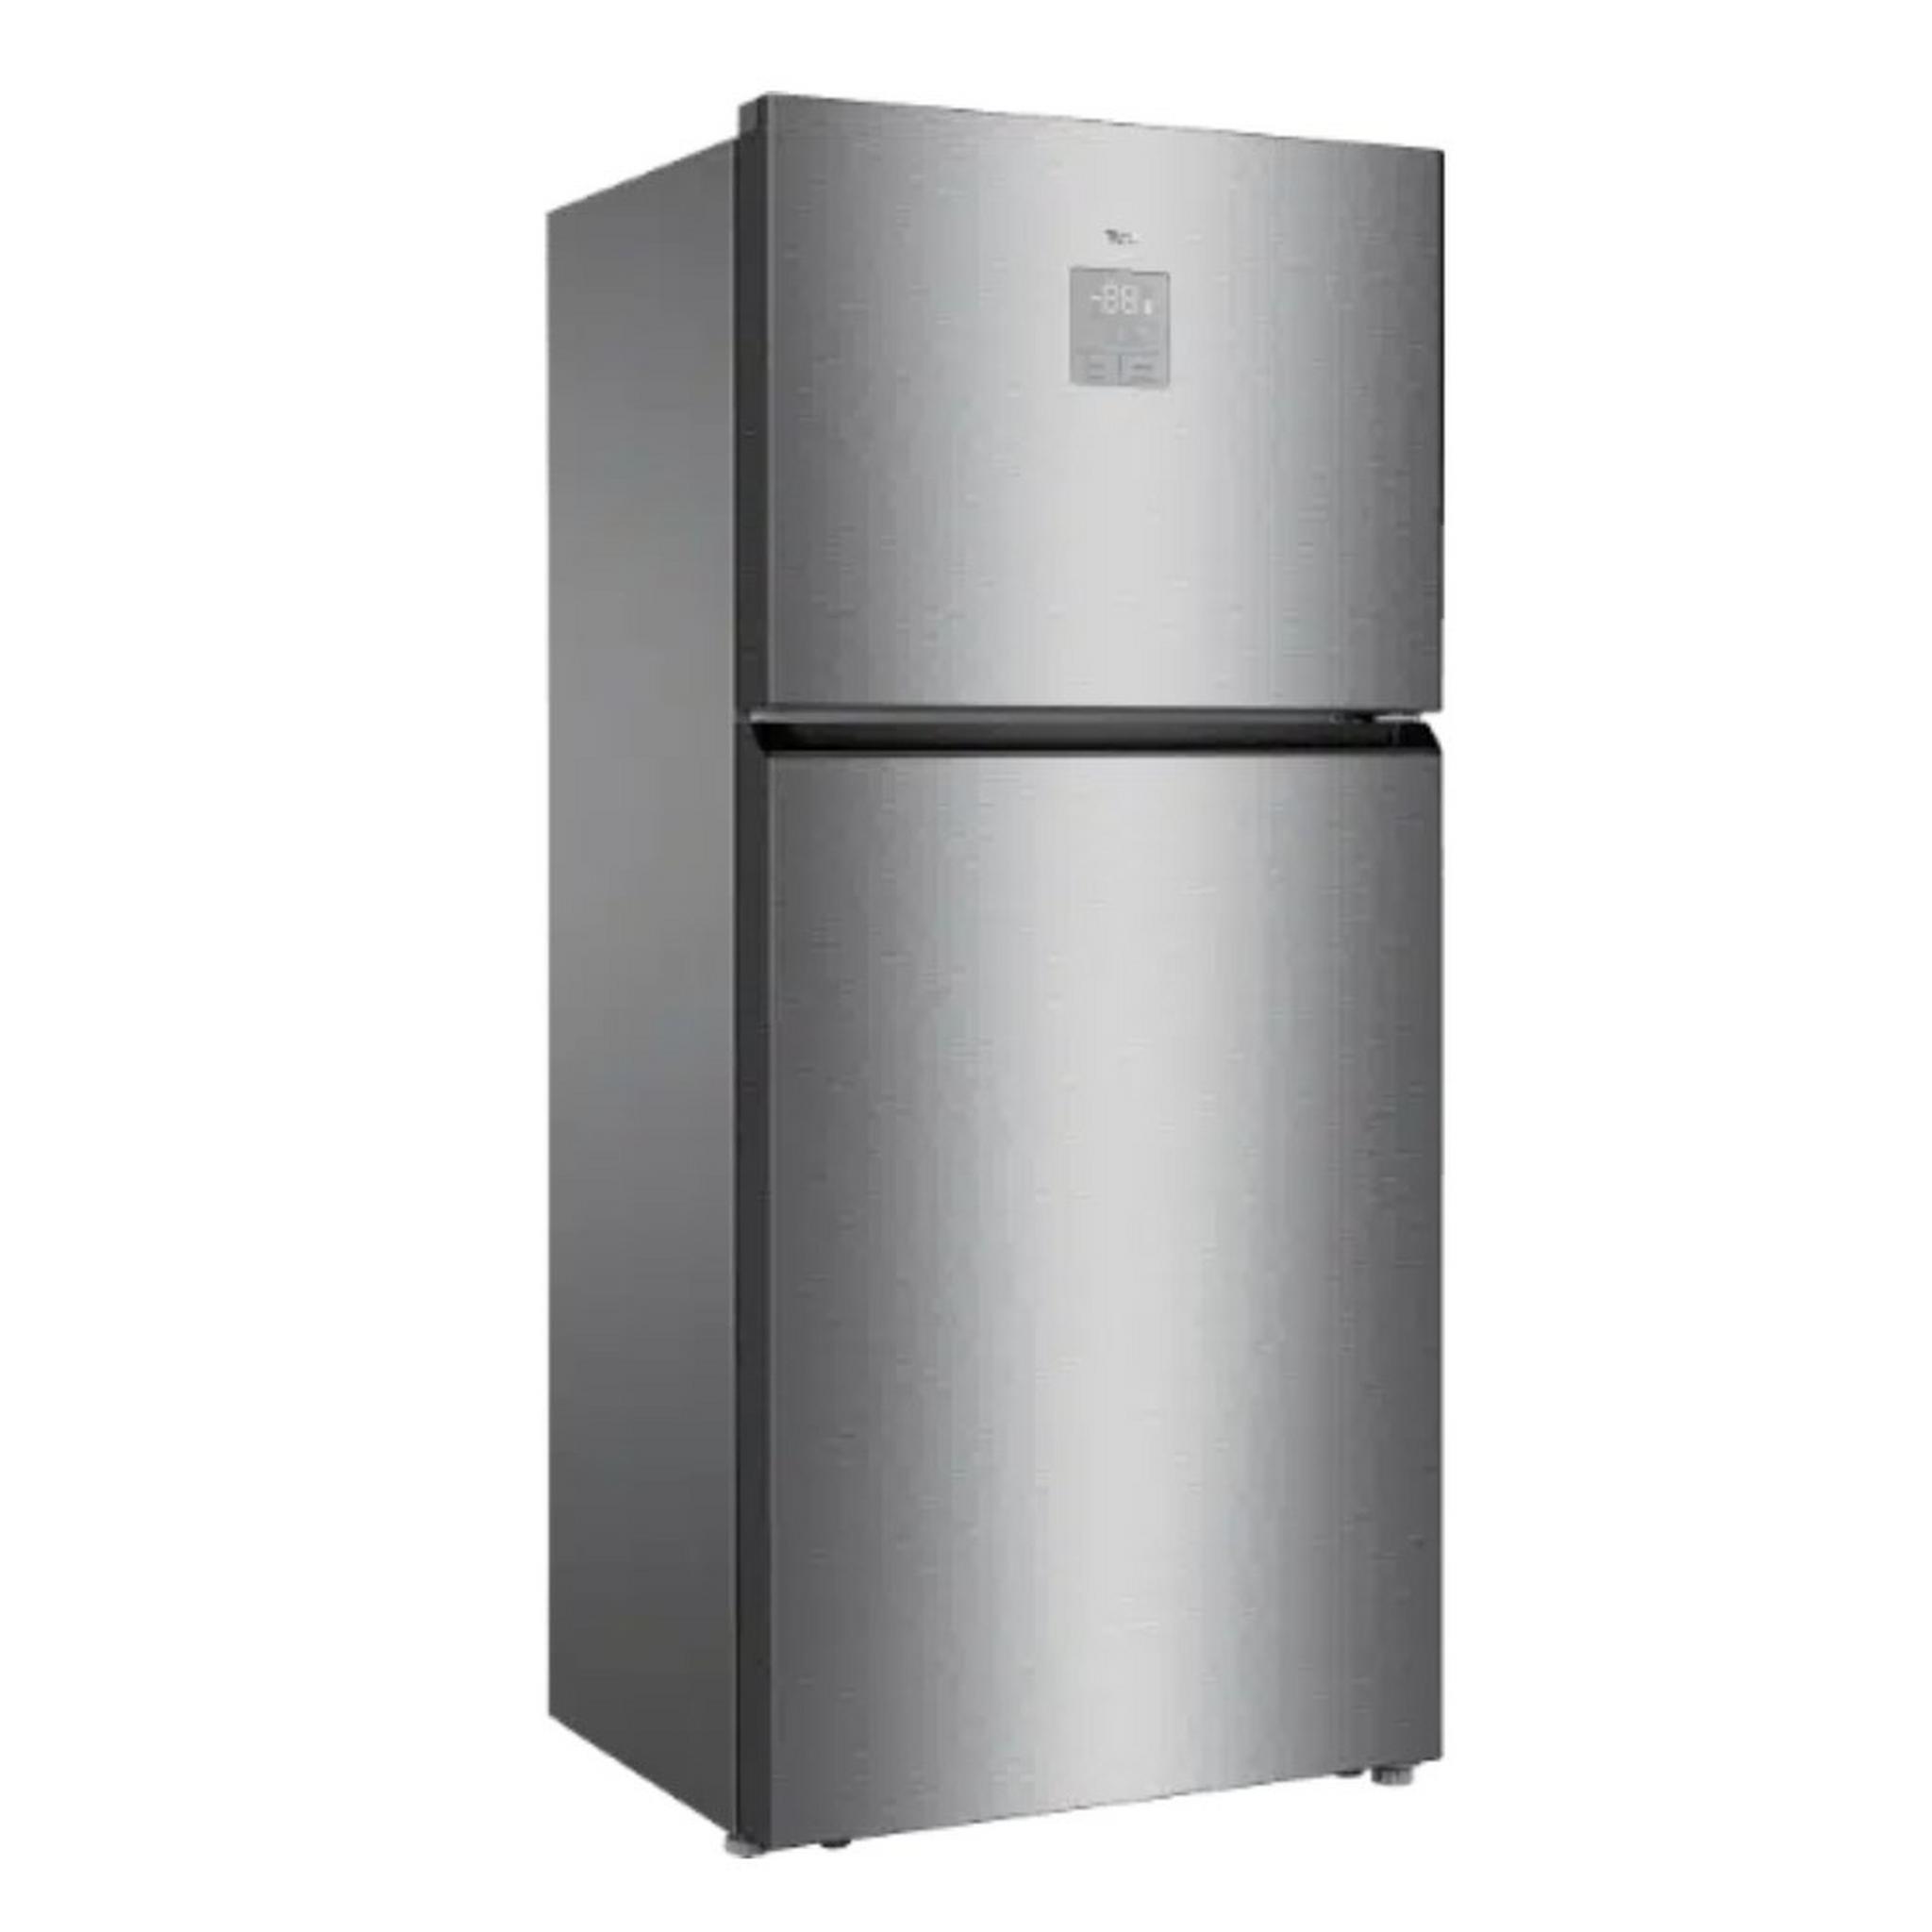 TCL Refrigerator Top Freezer, 25 CFT, 700 Liters Capacity, P700TMN – Inox